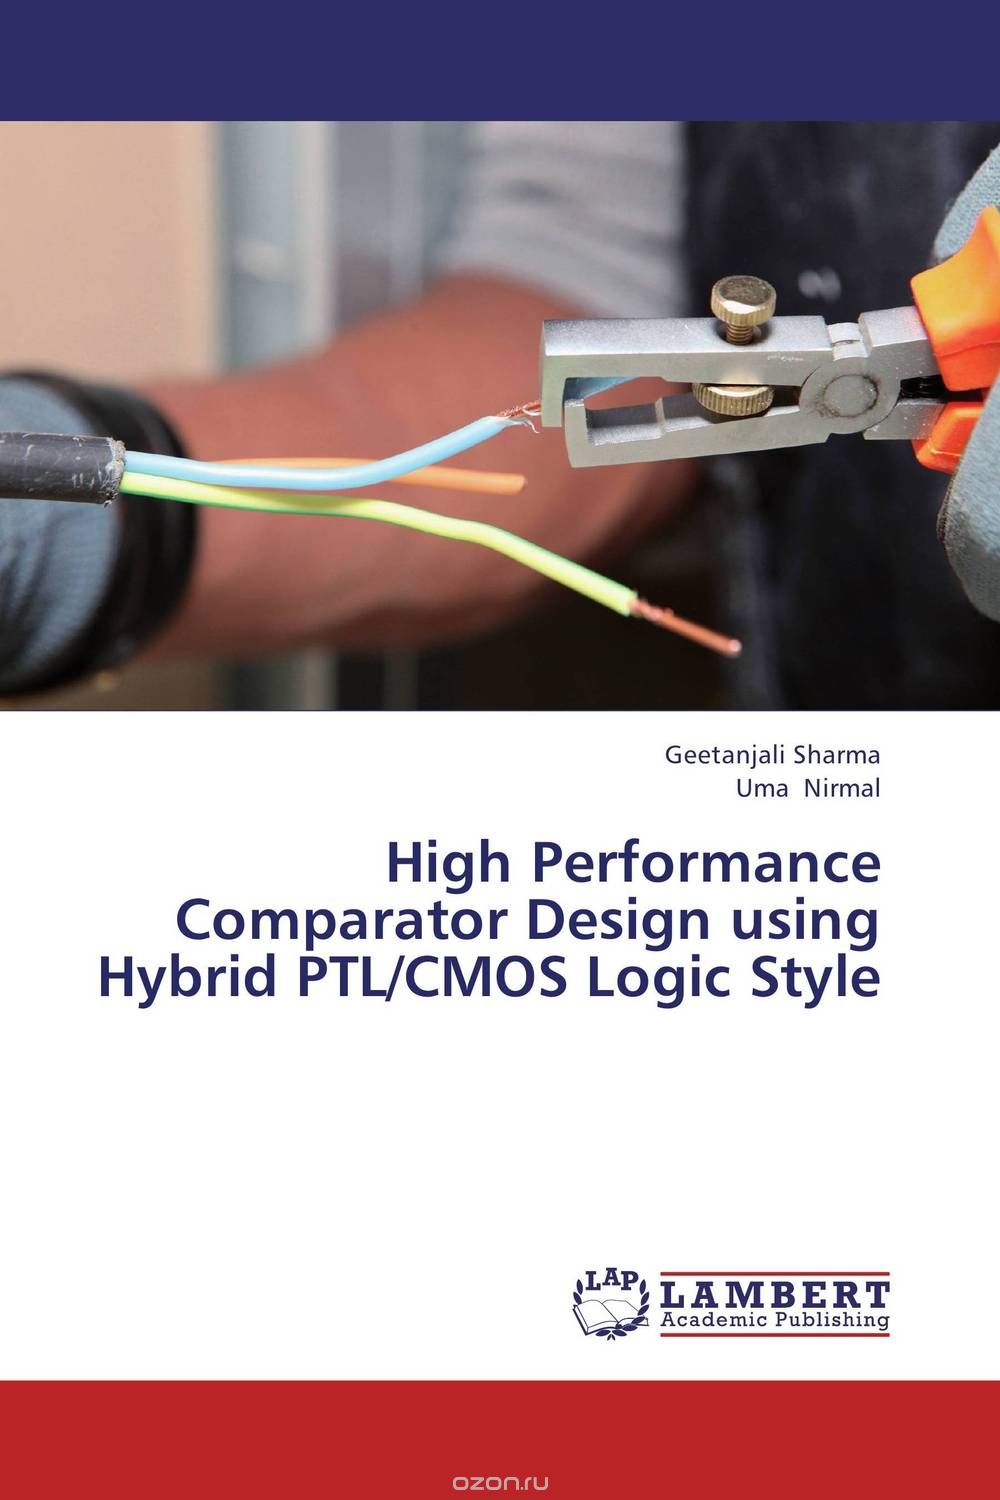 High Performance Comparator Design using Hybrid PTL/CMOS Logic Style